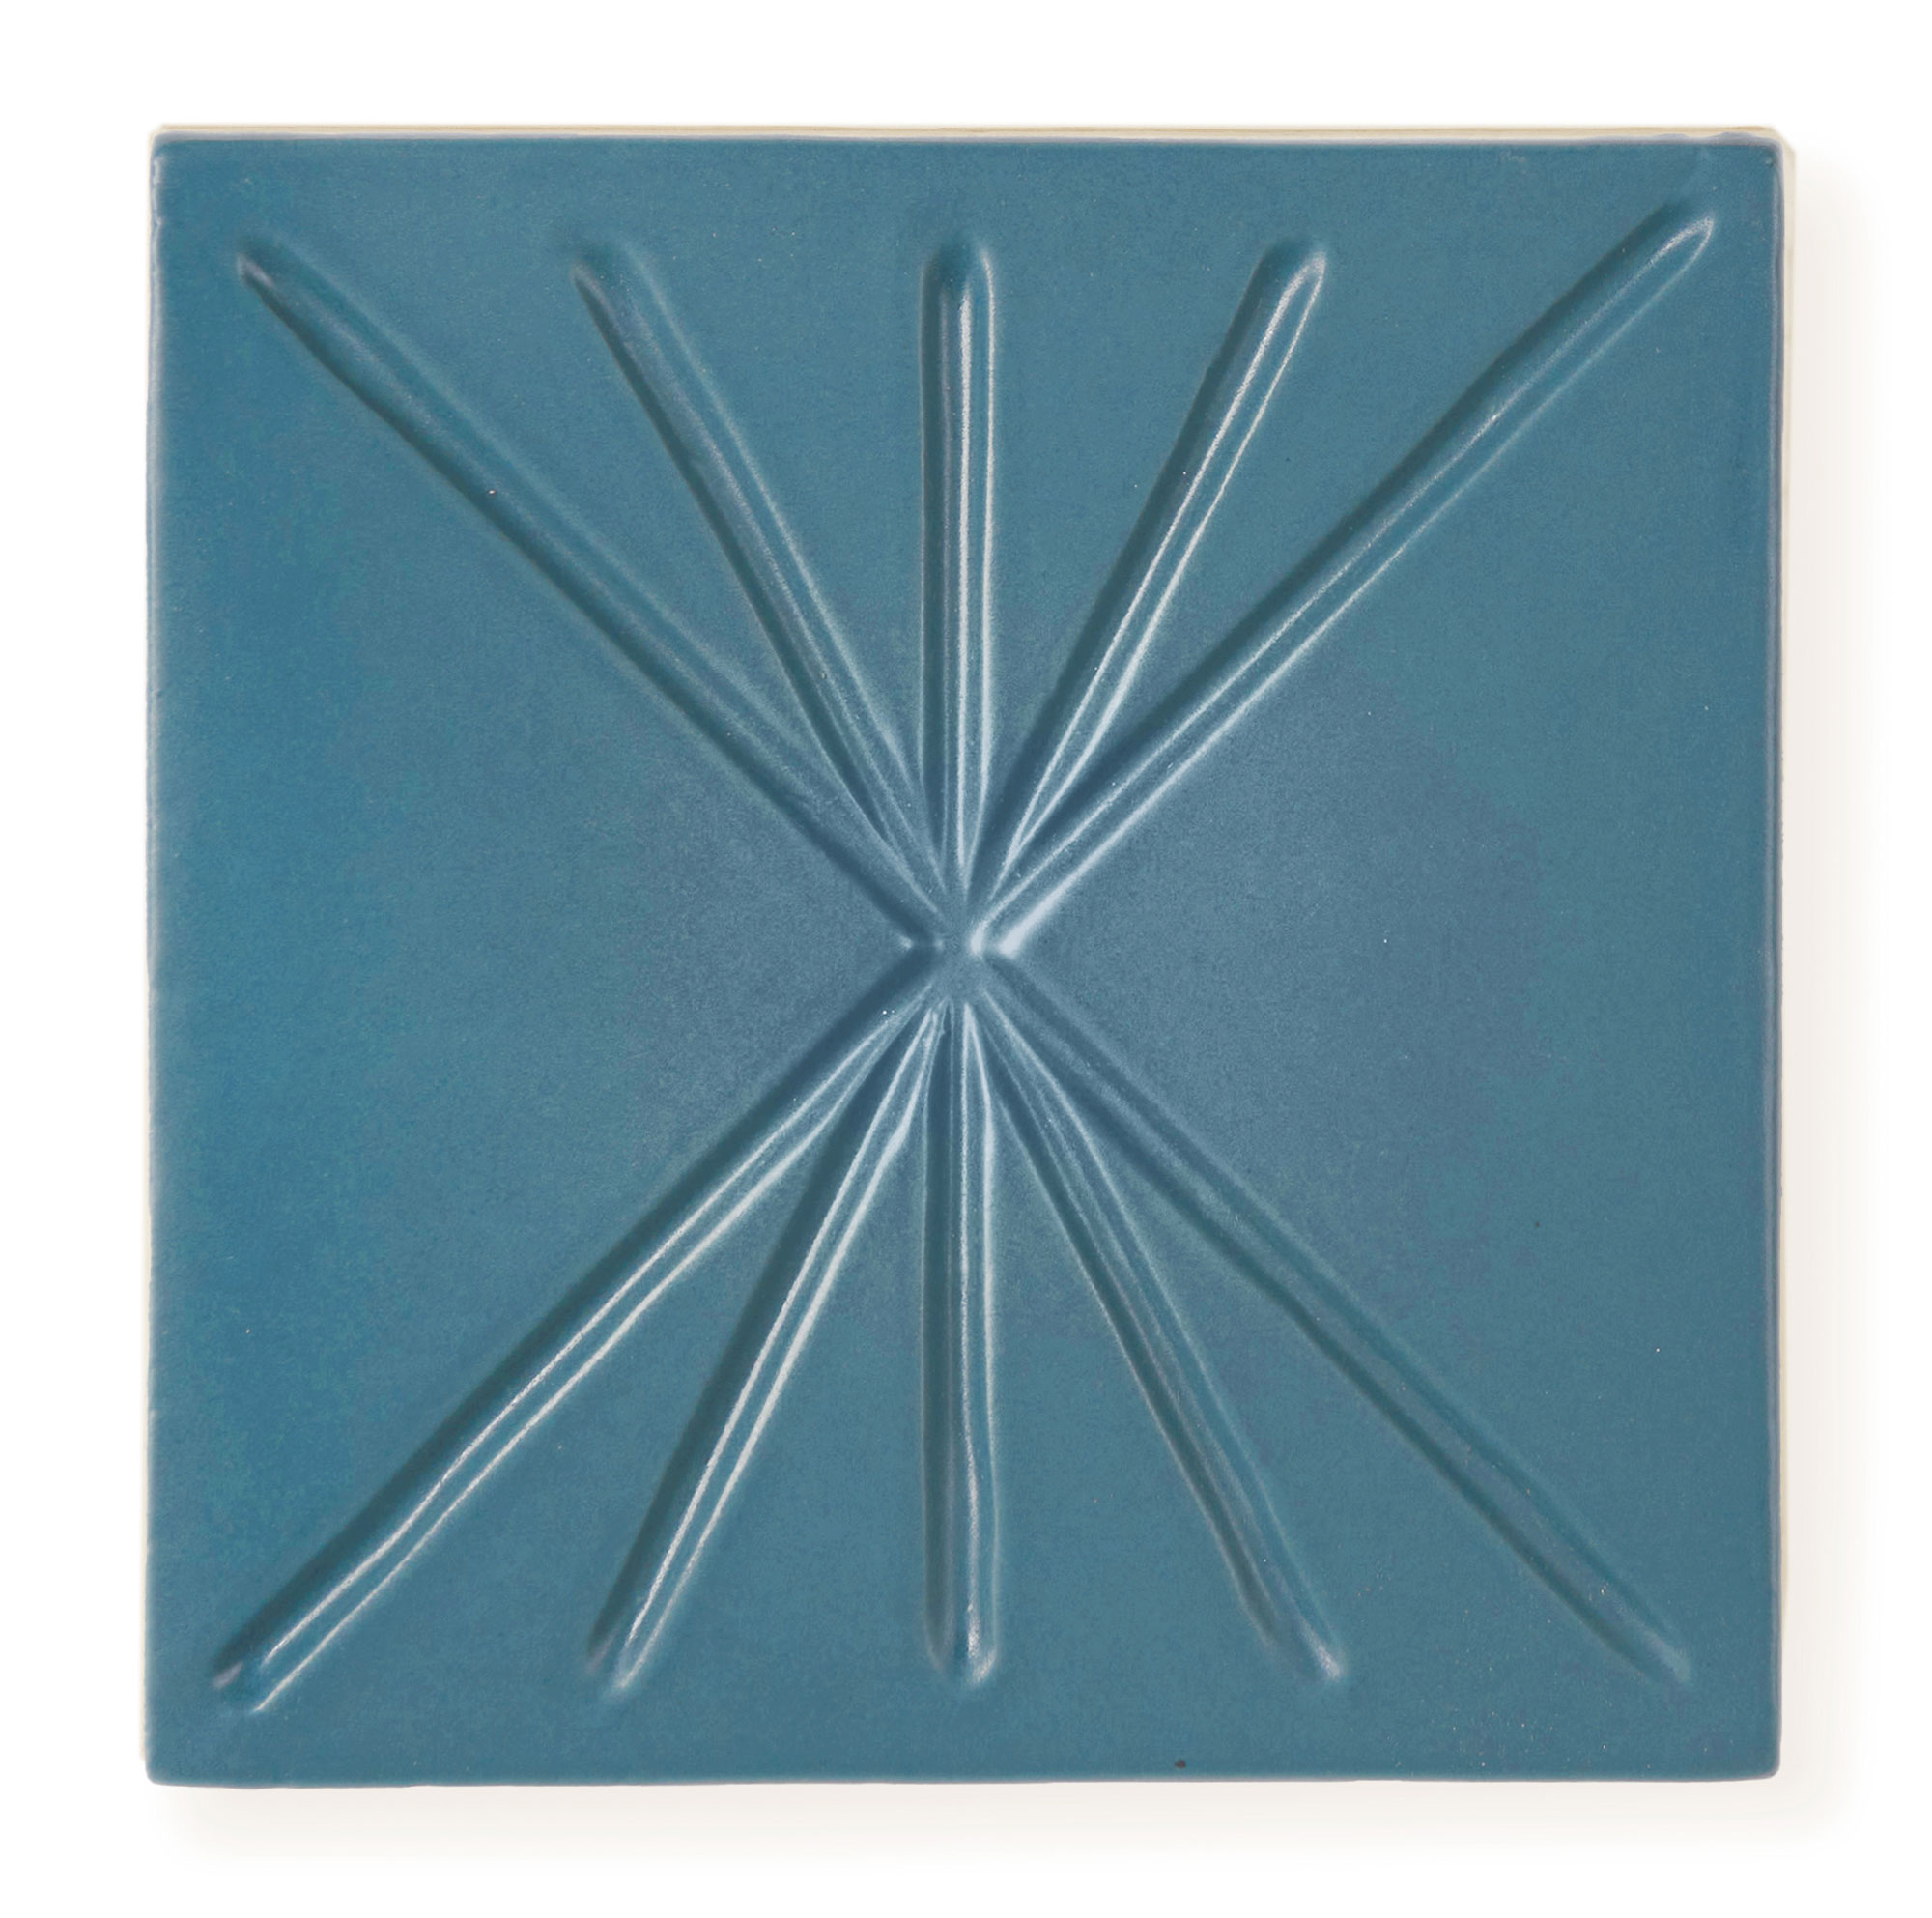 Tepoz Blue 6x6 - Dimensional Relief Artisan Ceramic Tile